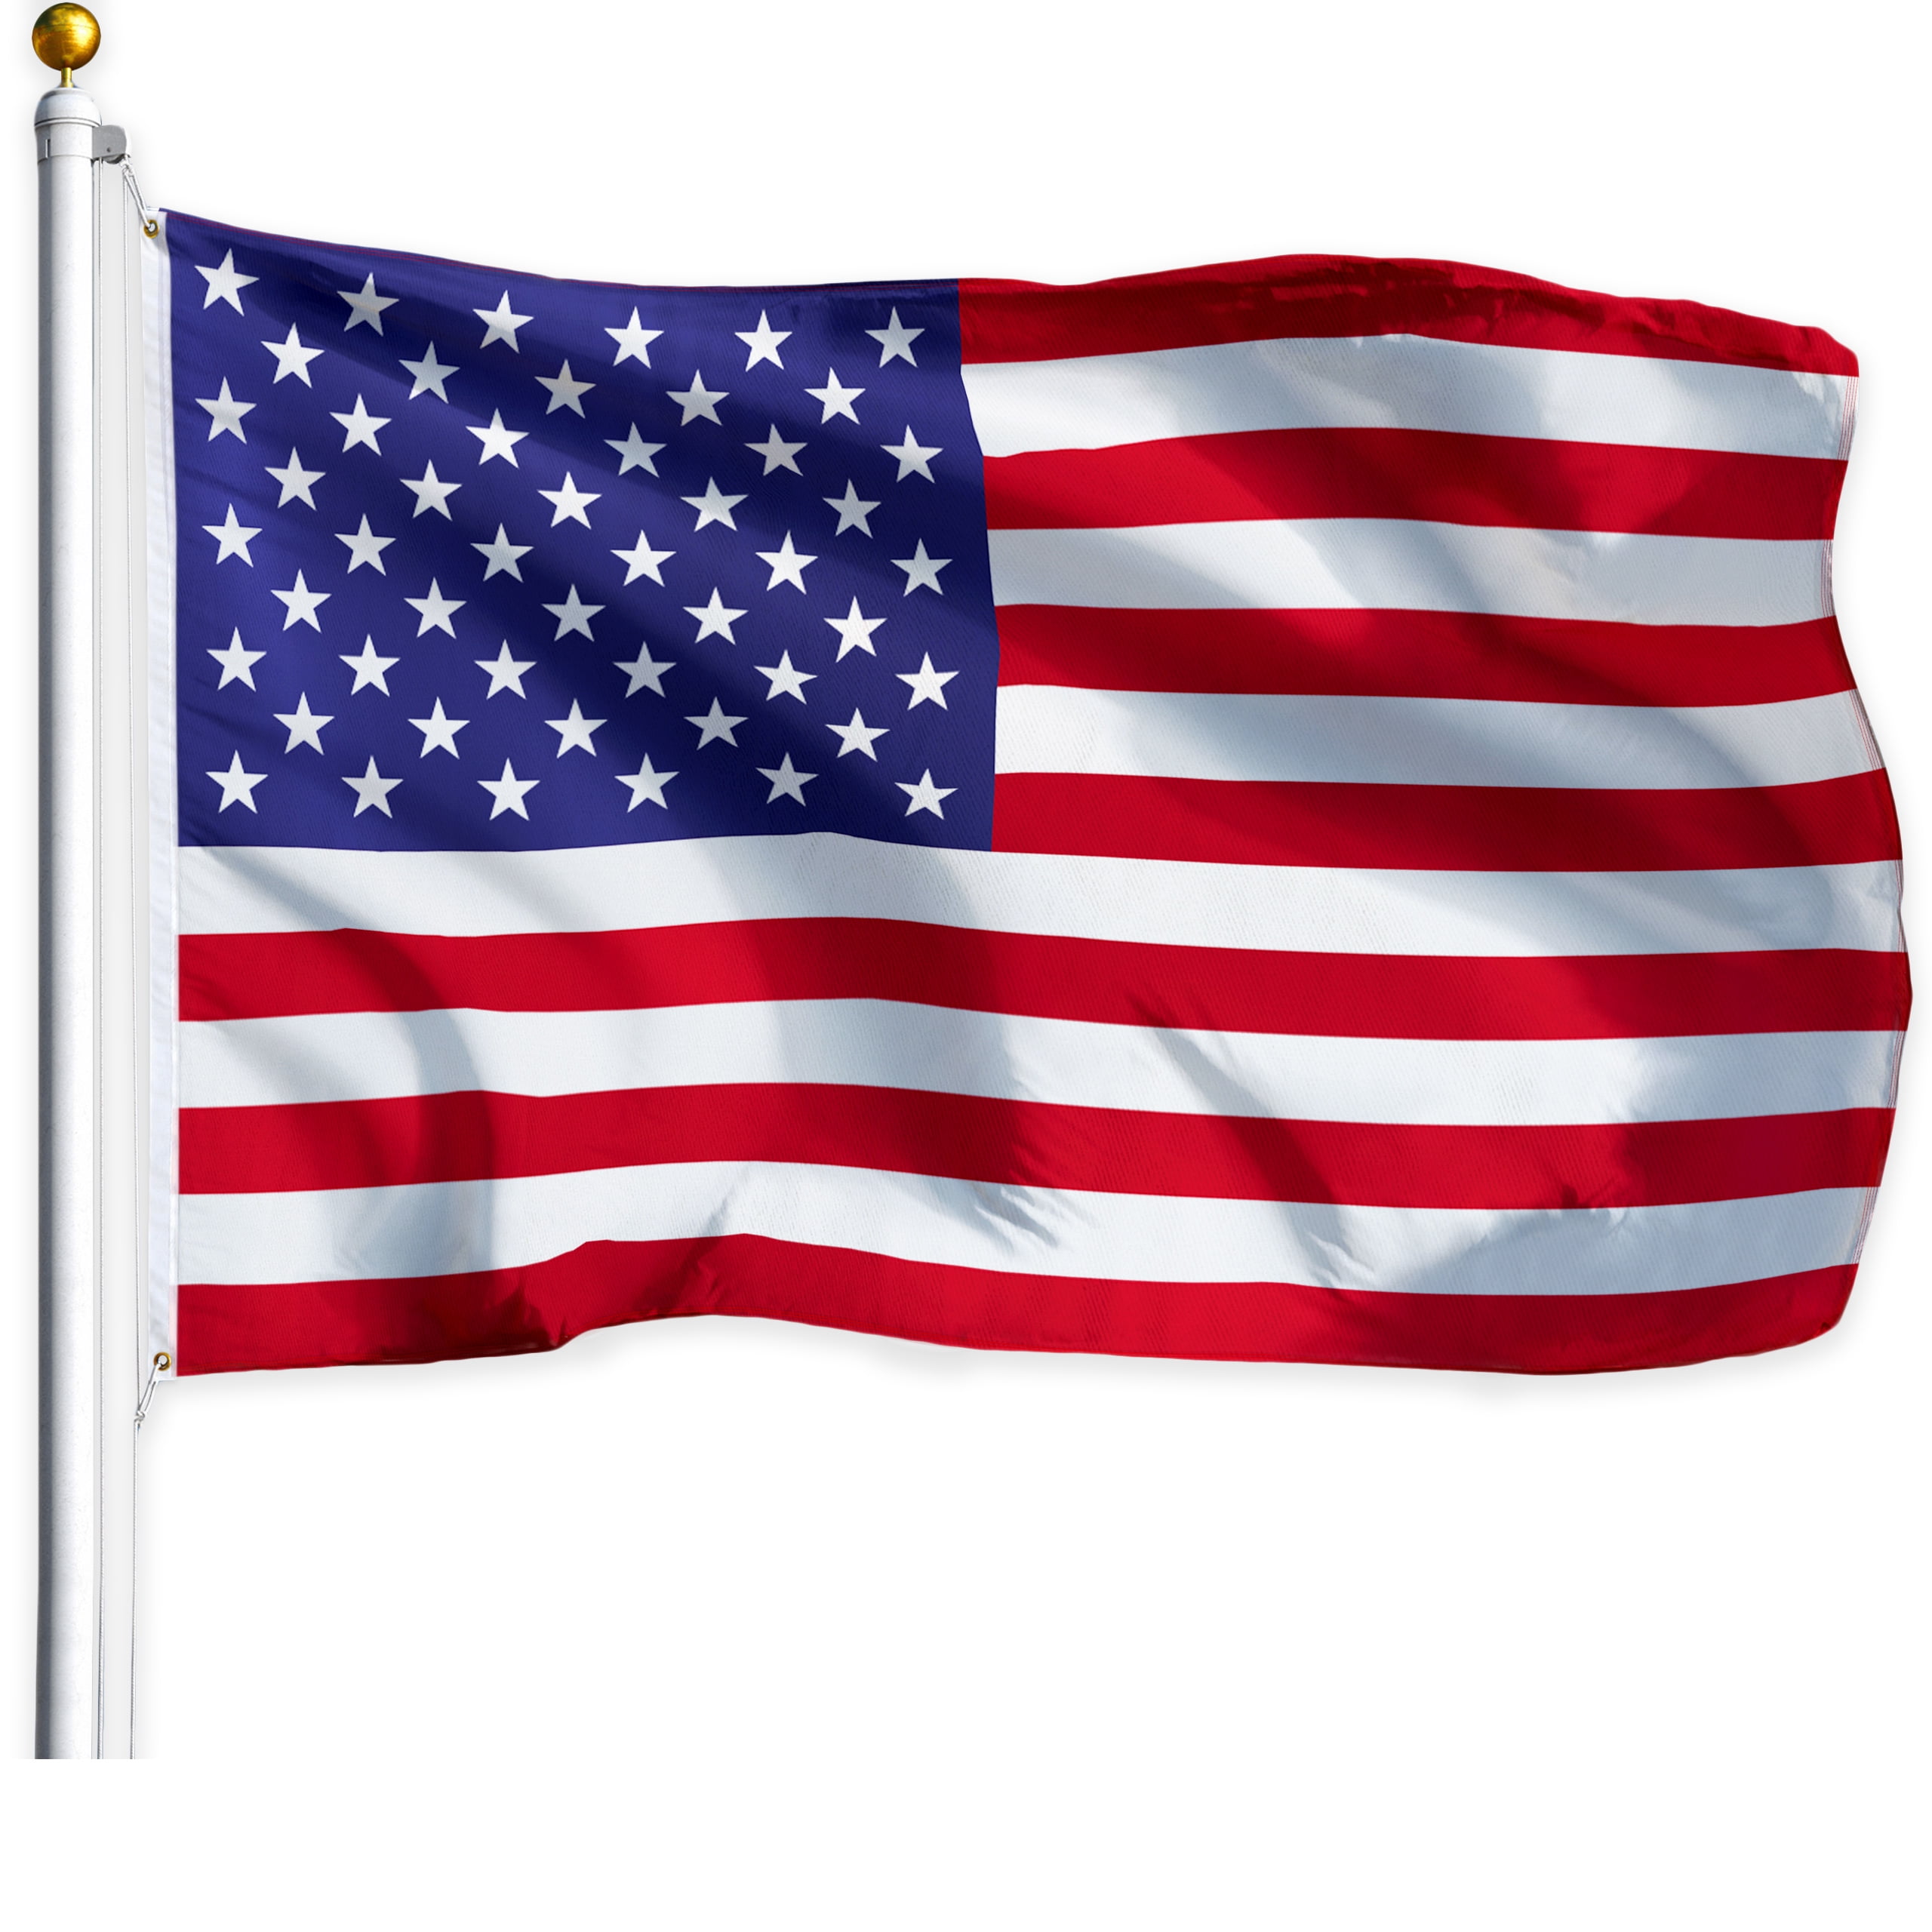 New 3x5 Polyester US Flag USA America Stars Stripes United States Brass Grommets 